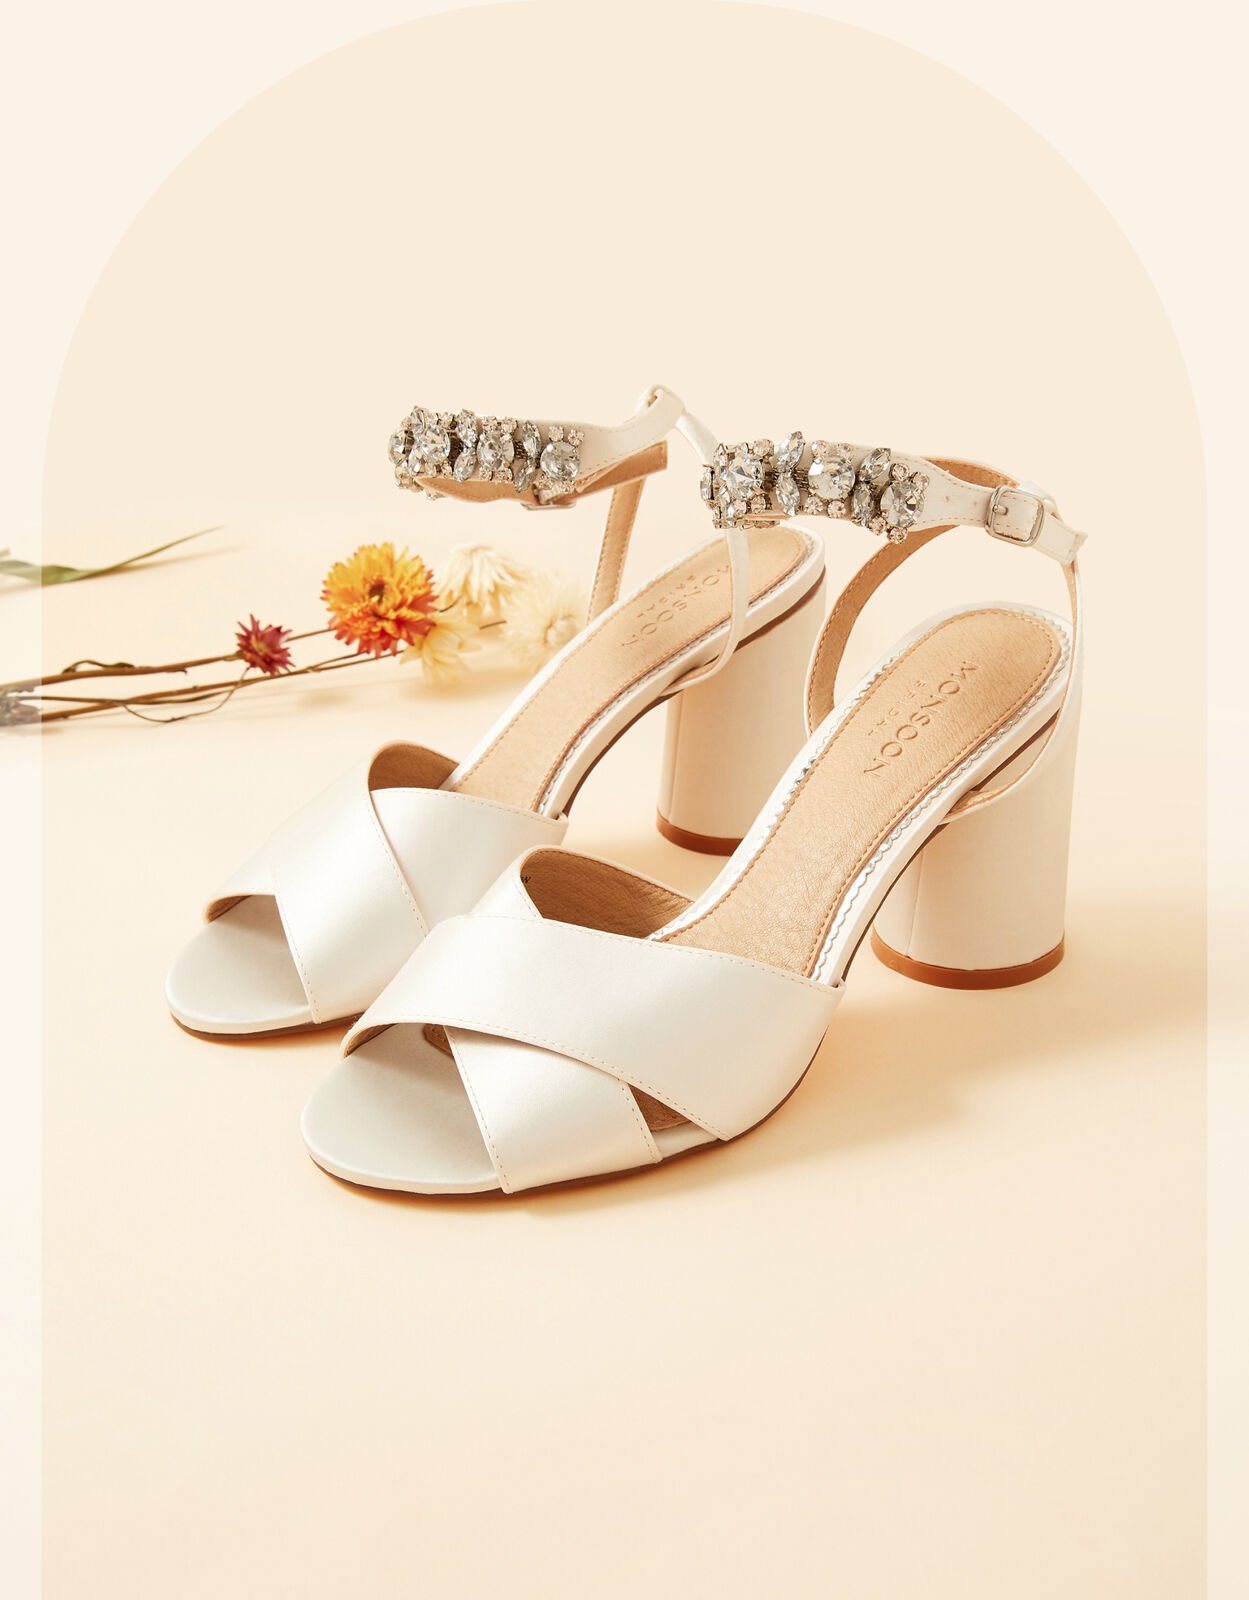 Women's Bridal Shoes Block Heel Wedding High Heels for Bride Closed Toe  Wedding Court Shoes Size 35-41,White,37EU: Amazon.co.uk: Fashion